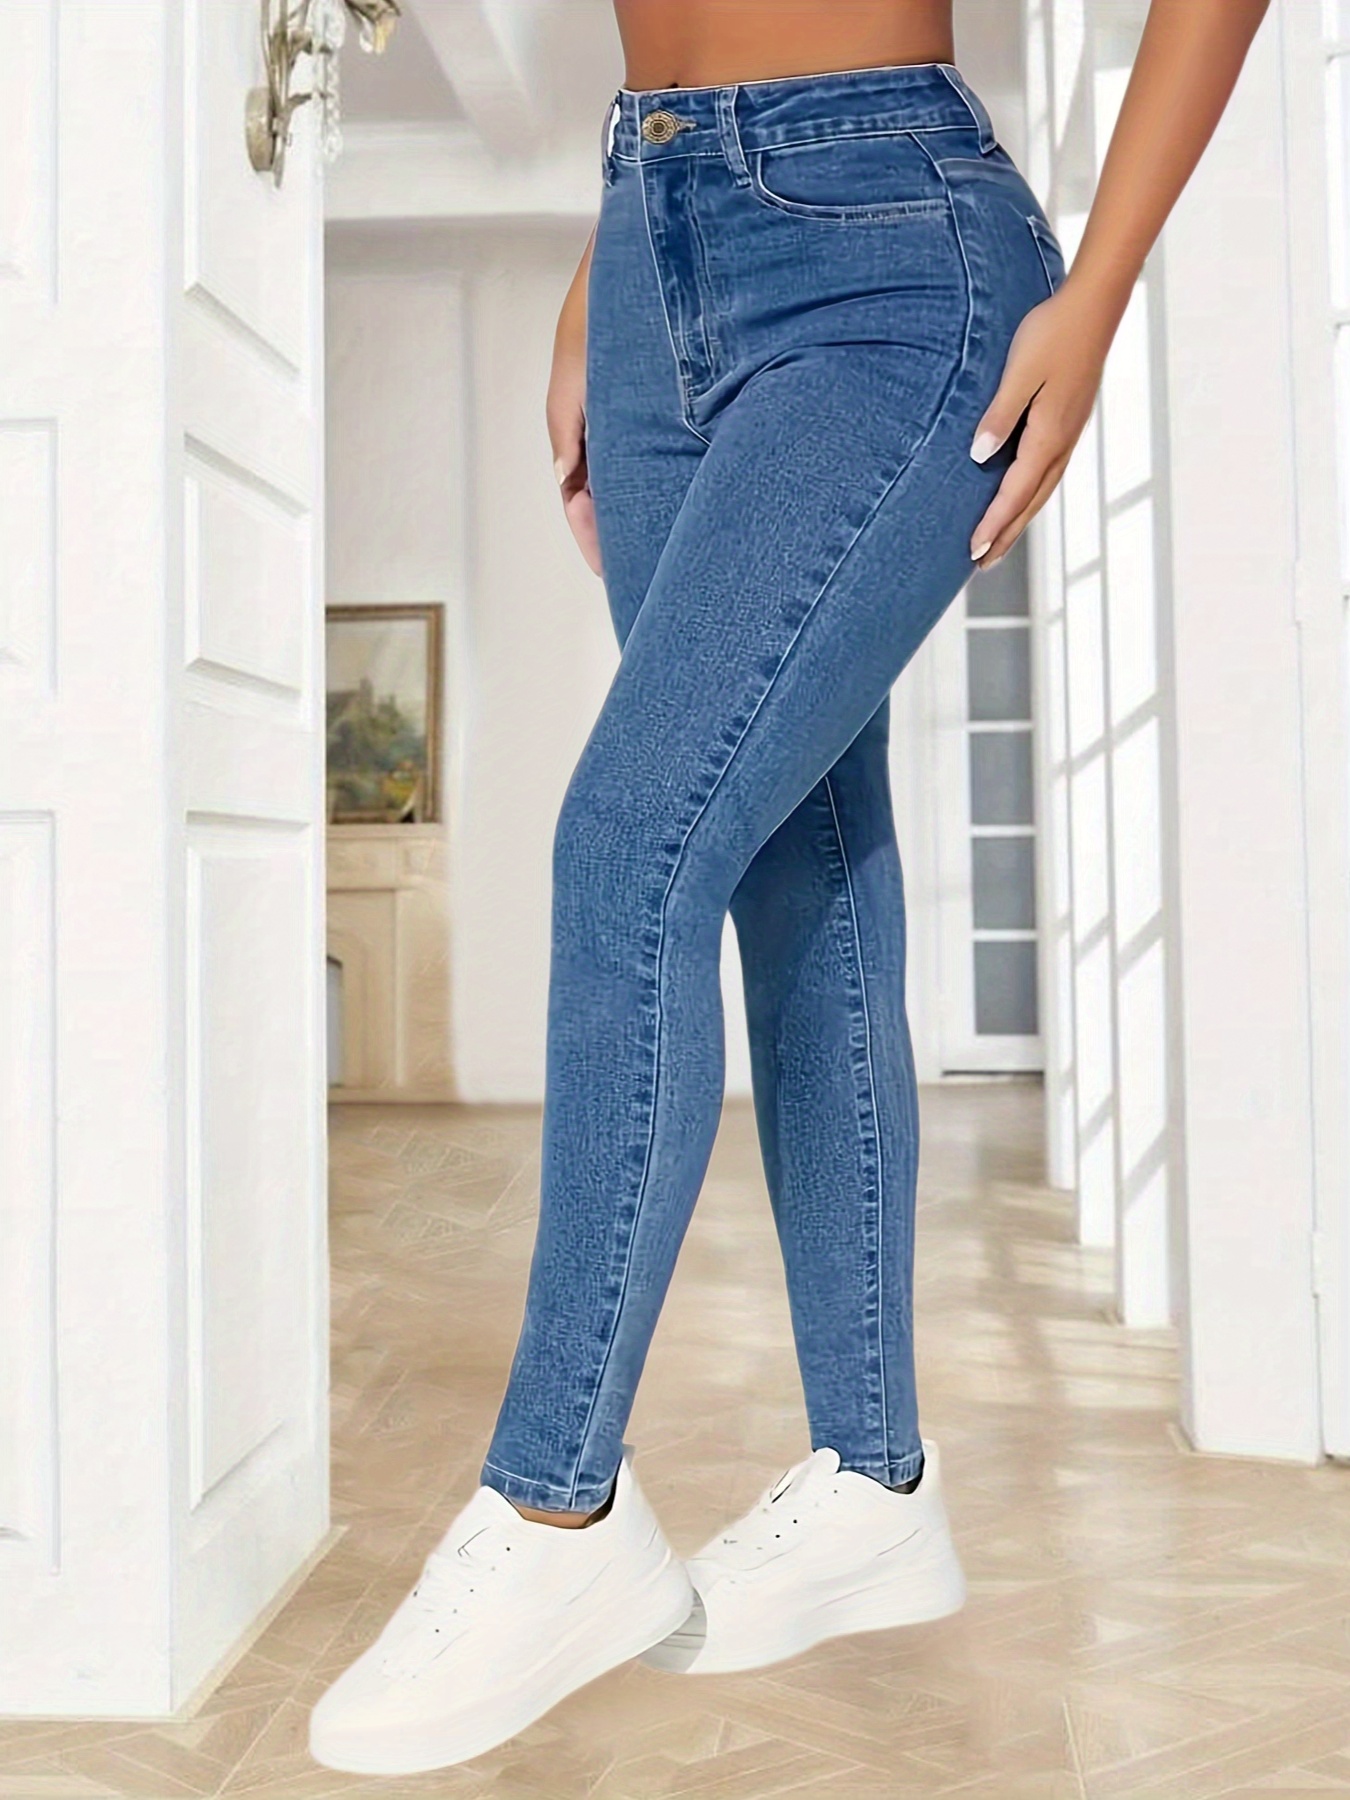 SZXZYGS Jeans for Women Women Solid Color Hole Low Waist Jeans